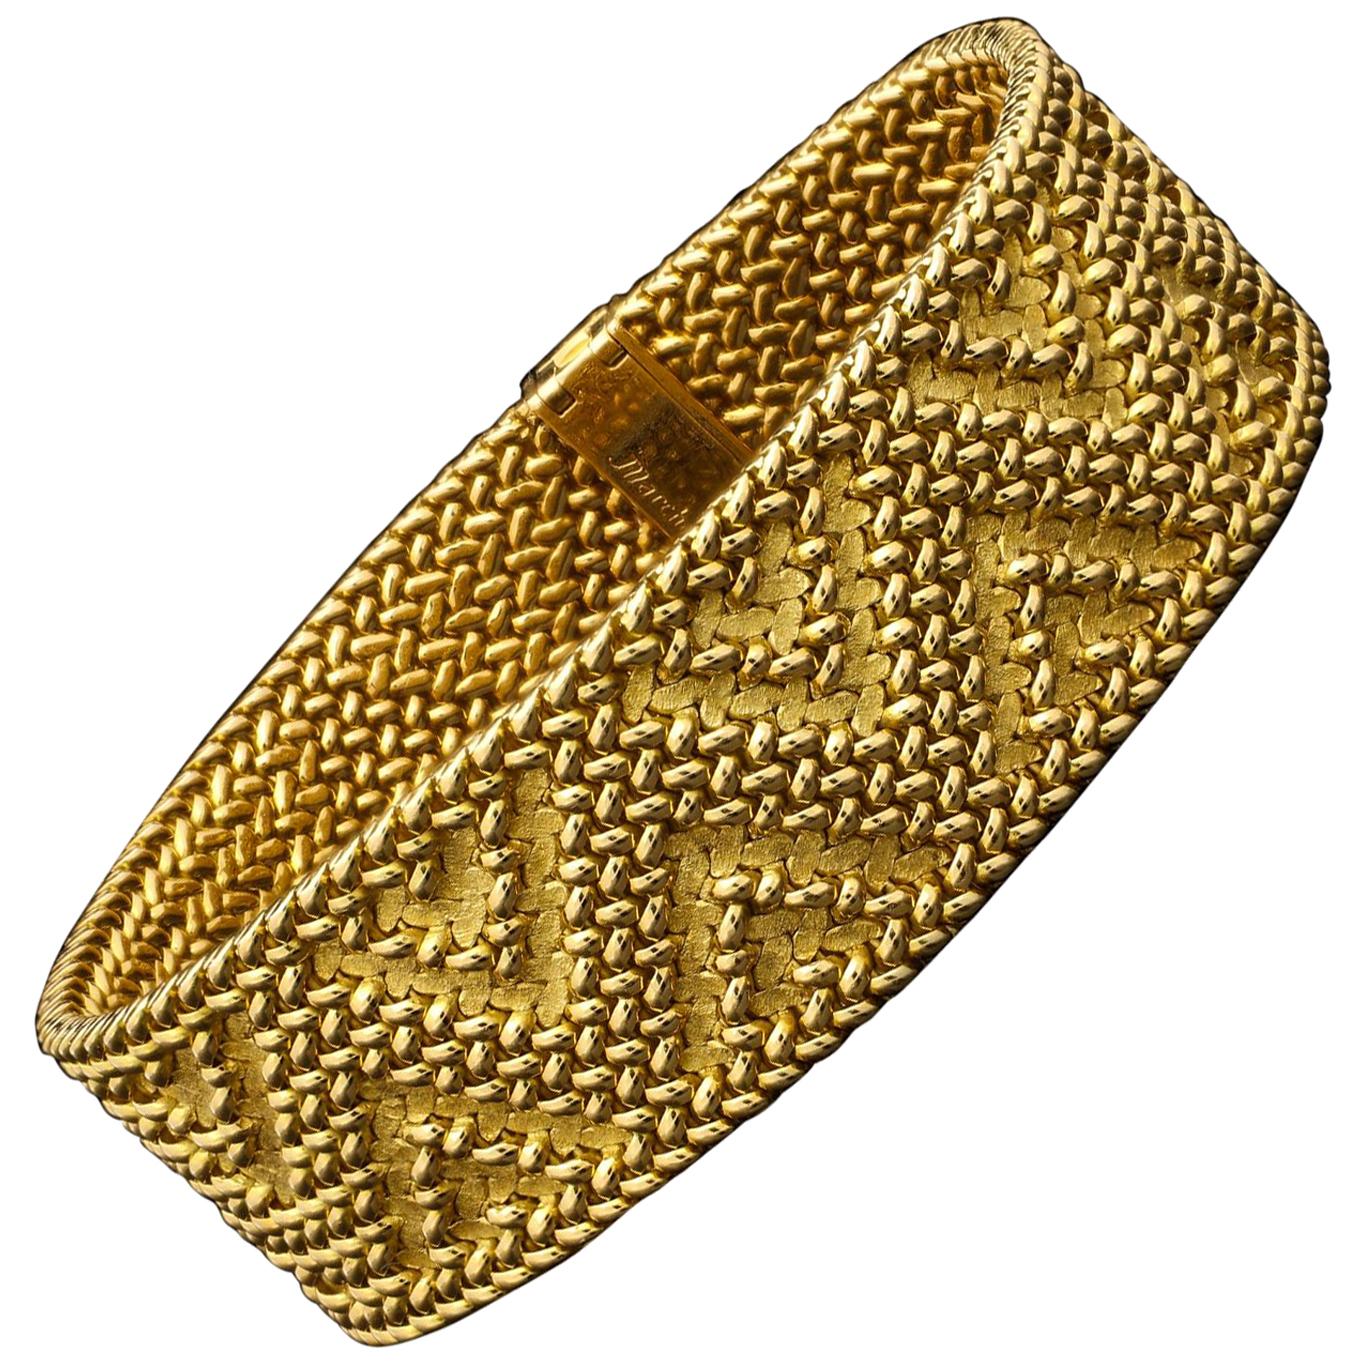 Vintage 18ct Gold Strap Bracelet with Textured ZigZag Pattern by Marchak c.1970s